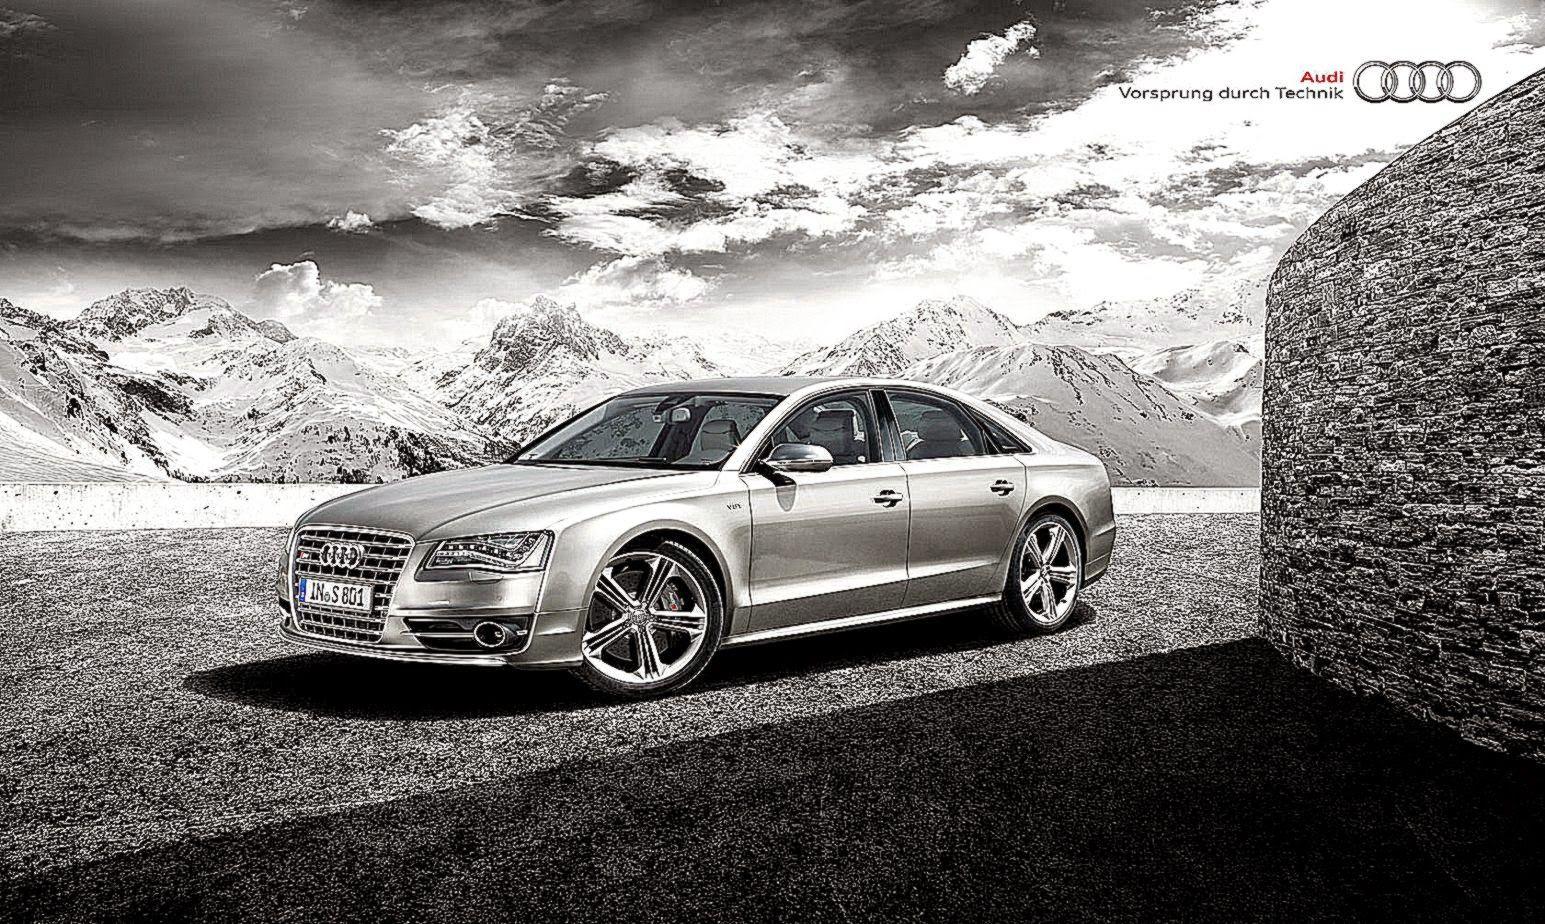 Audi S8 Poster Image. Best Background Wallpaper